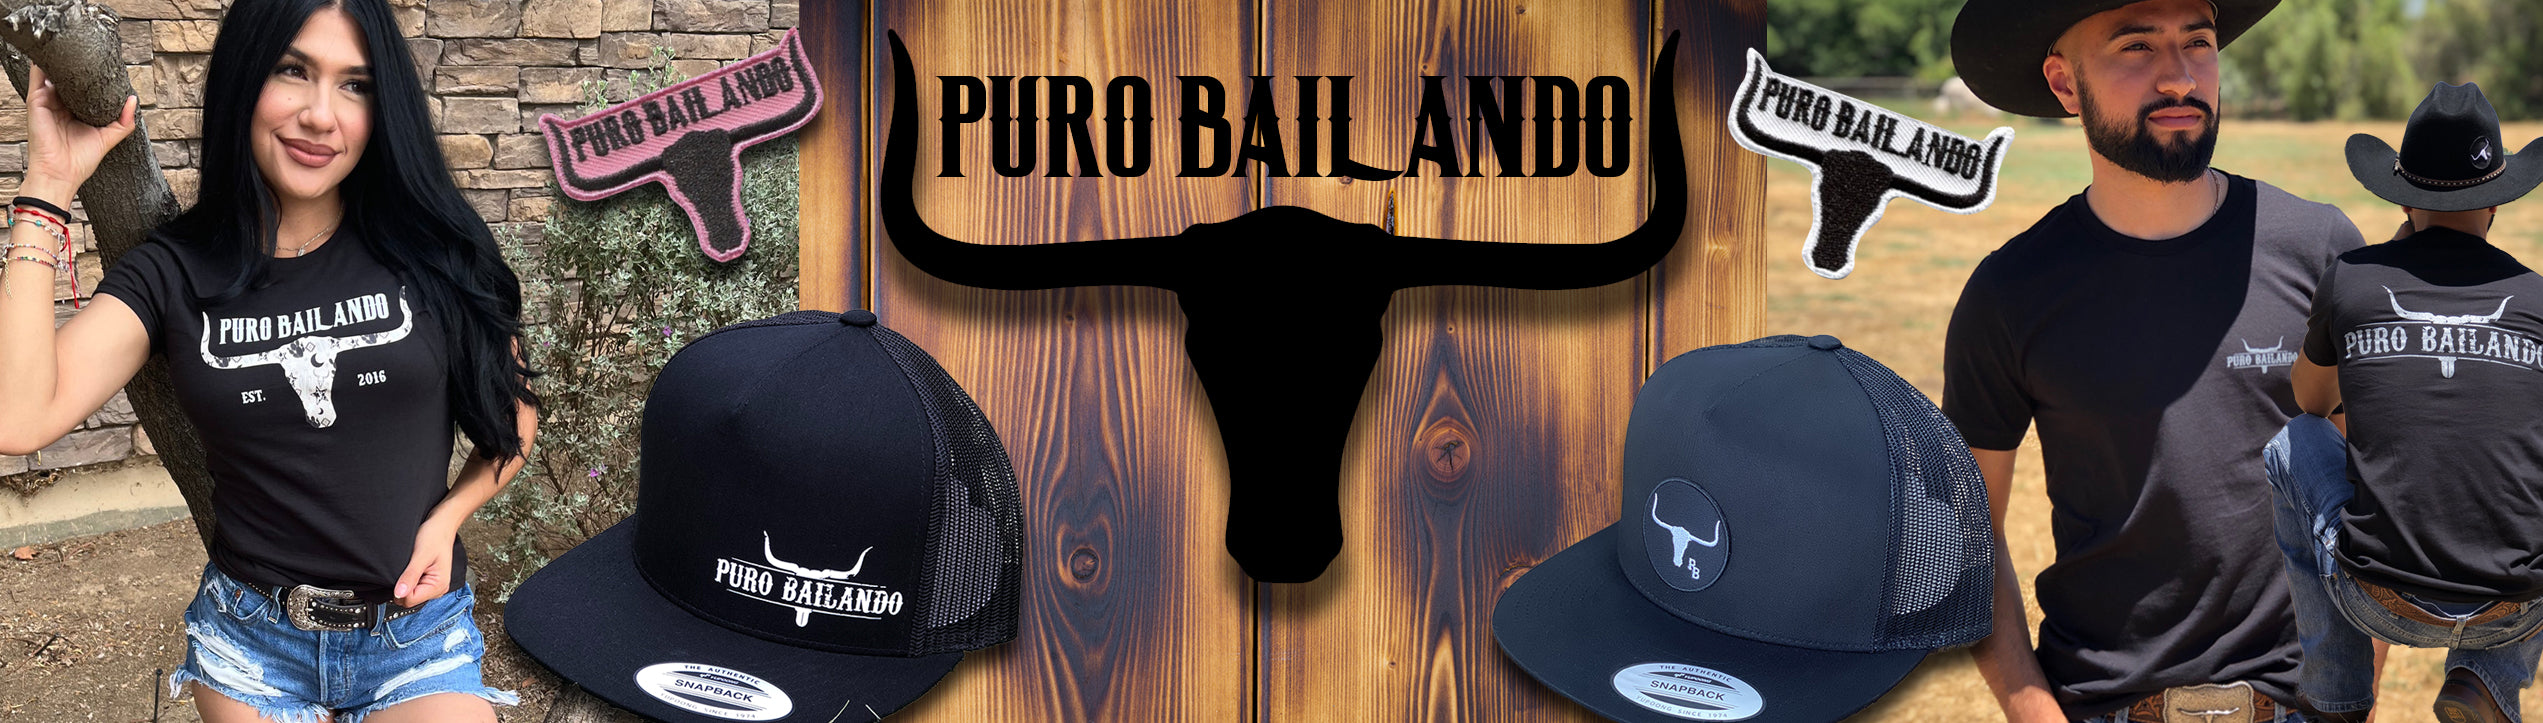 Puro Bailando - High Quality Mexican Dancing Clothes